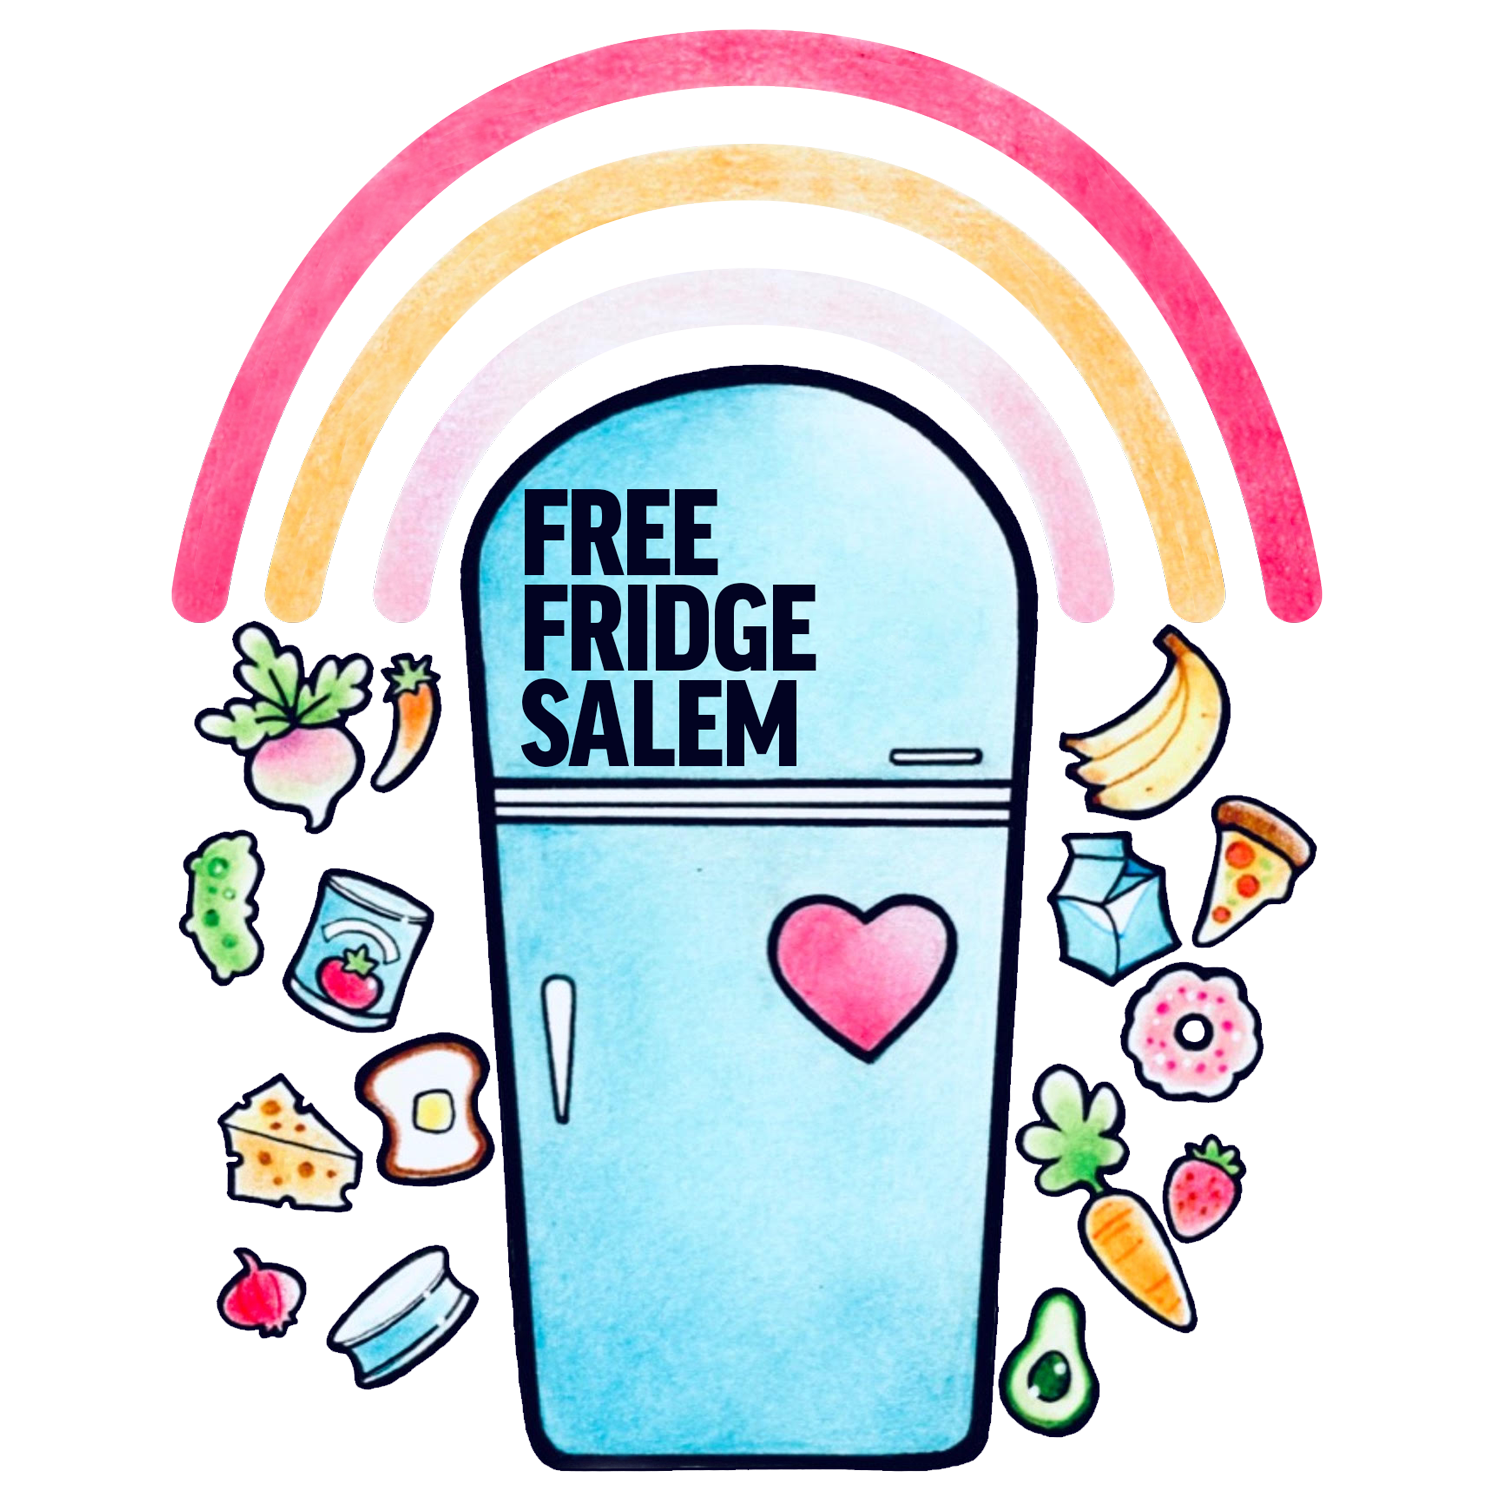 Free Fridge Salem